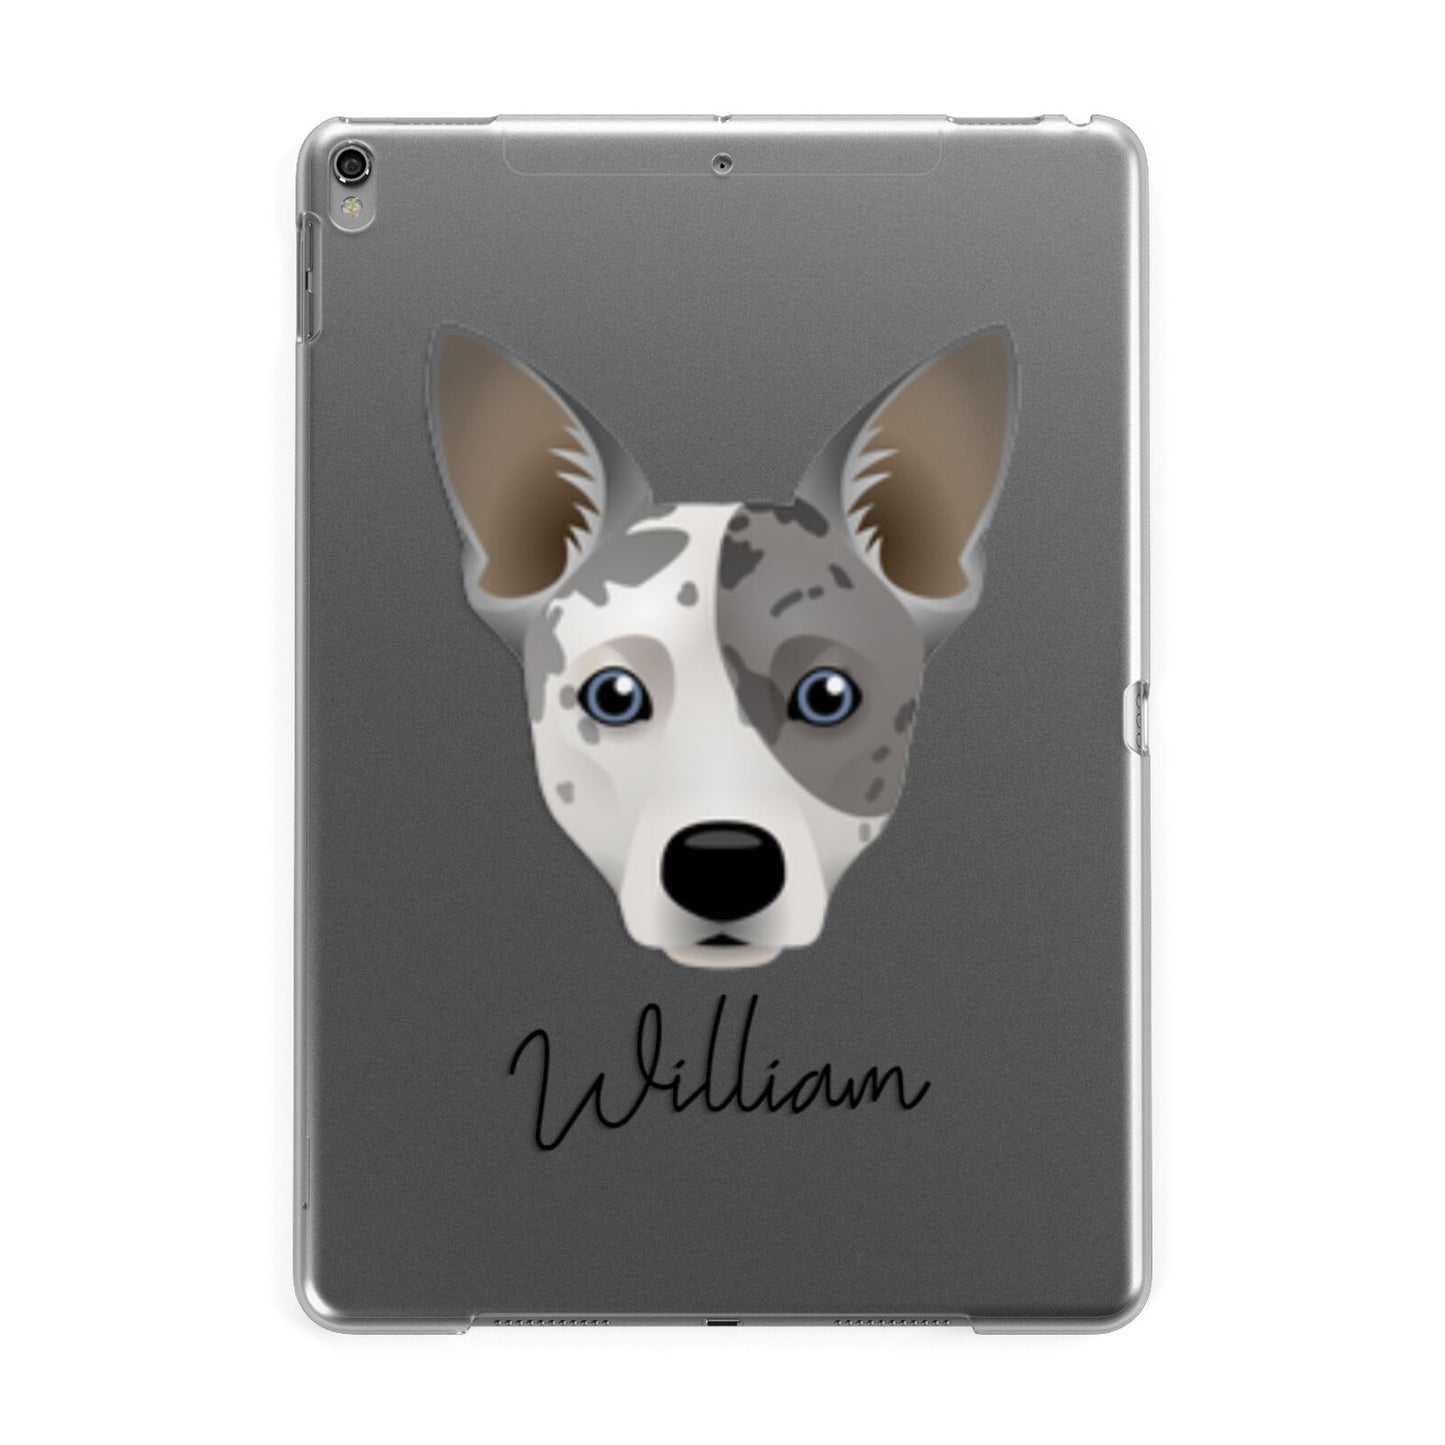 Cojack Personalised Apple iPad Grey Case